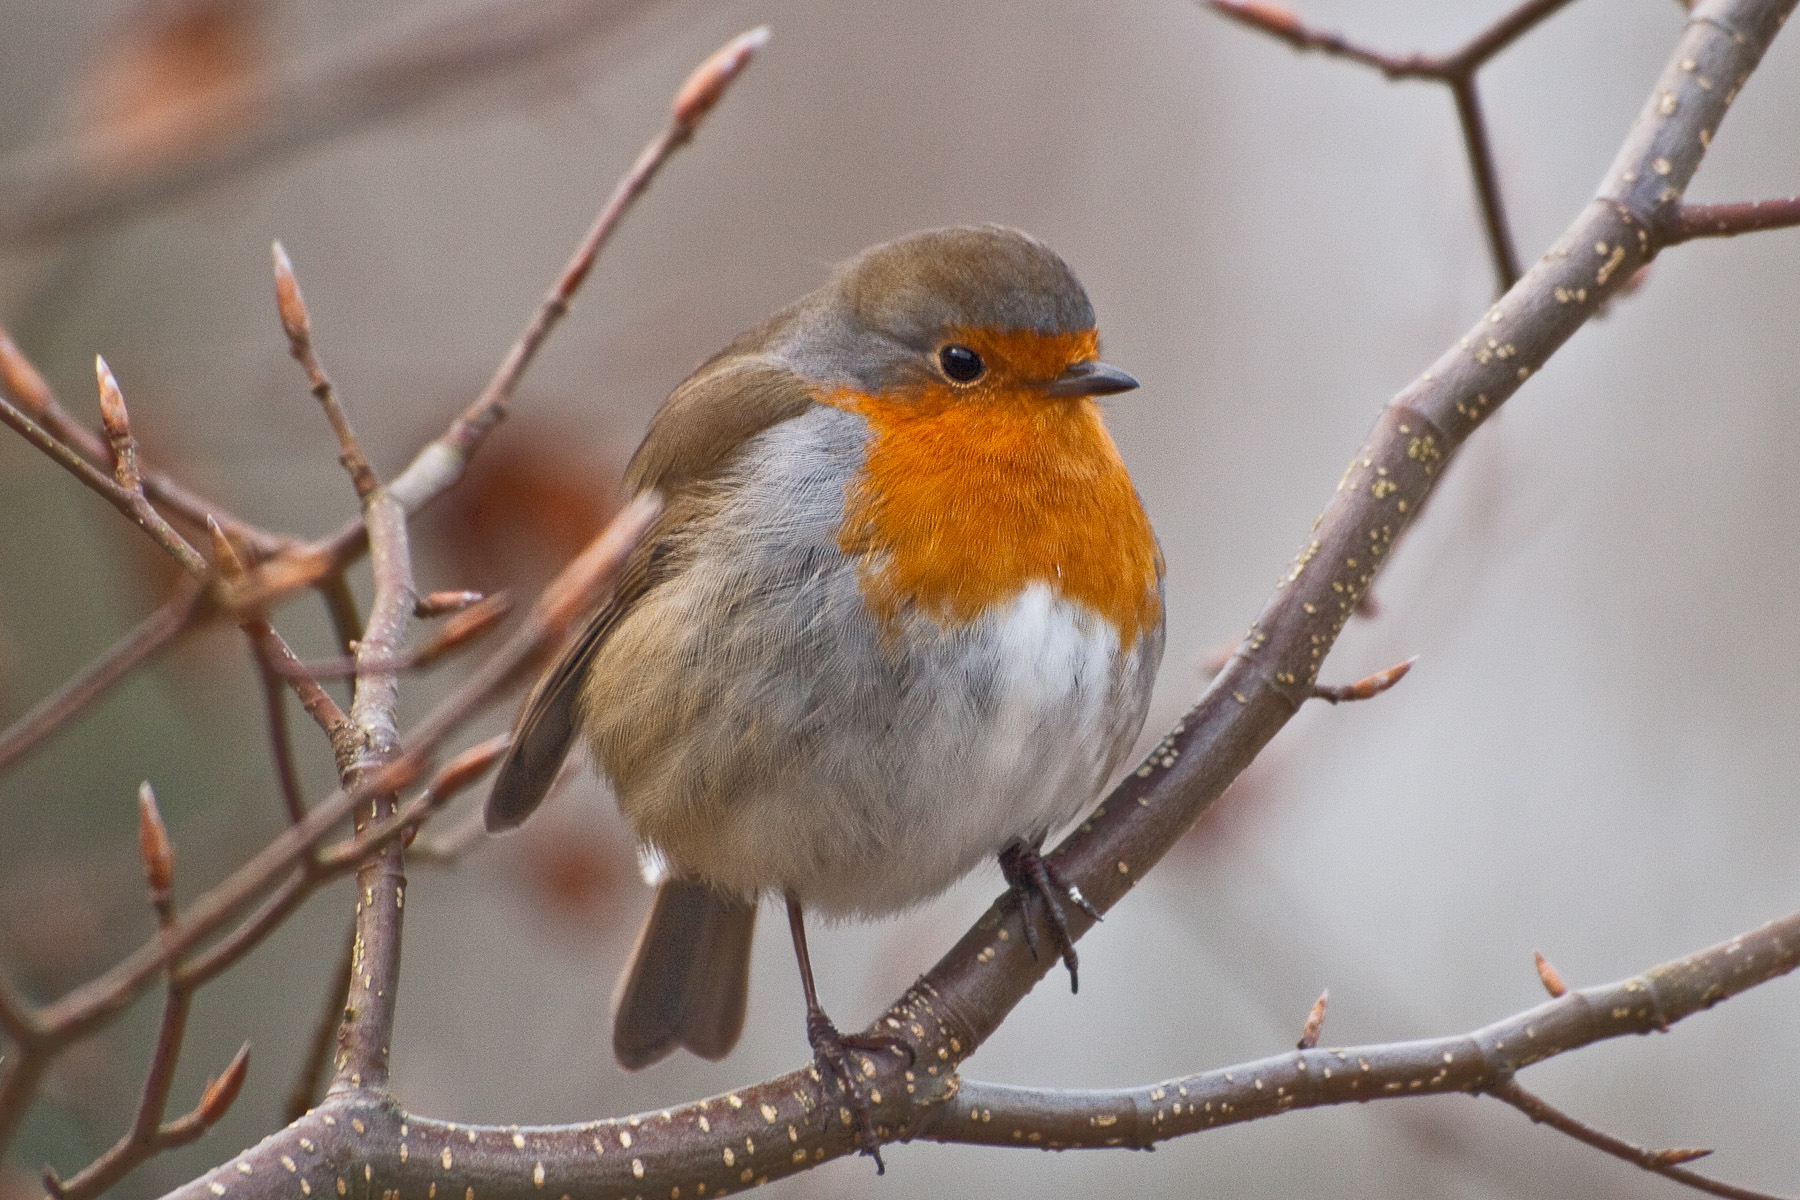 File:Puffed-Up Winter Robin.jpg - Wikimedia Commons